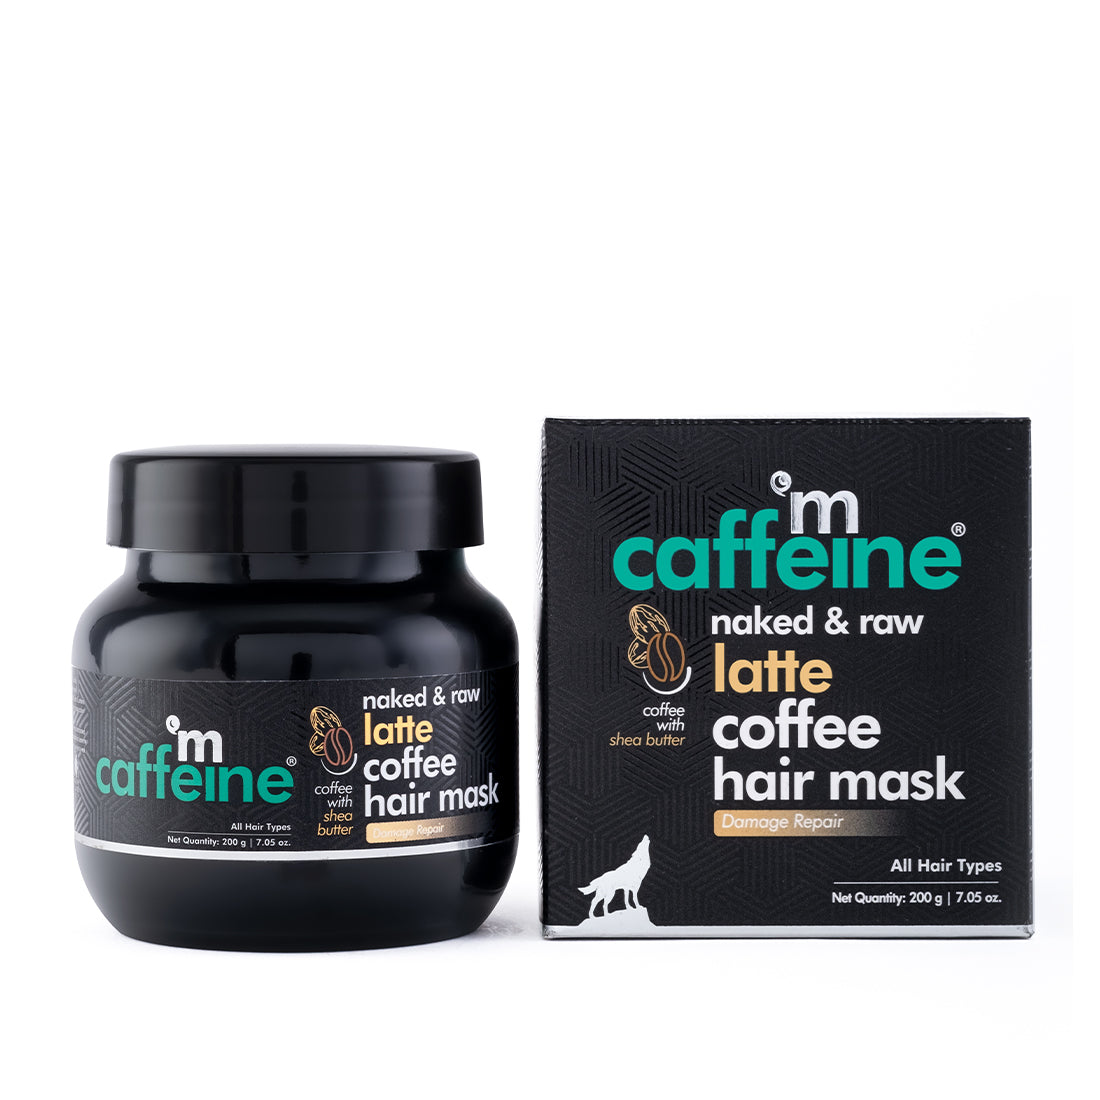 mCaffeine Coffee Hair Mask